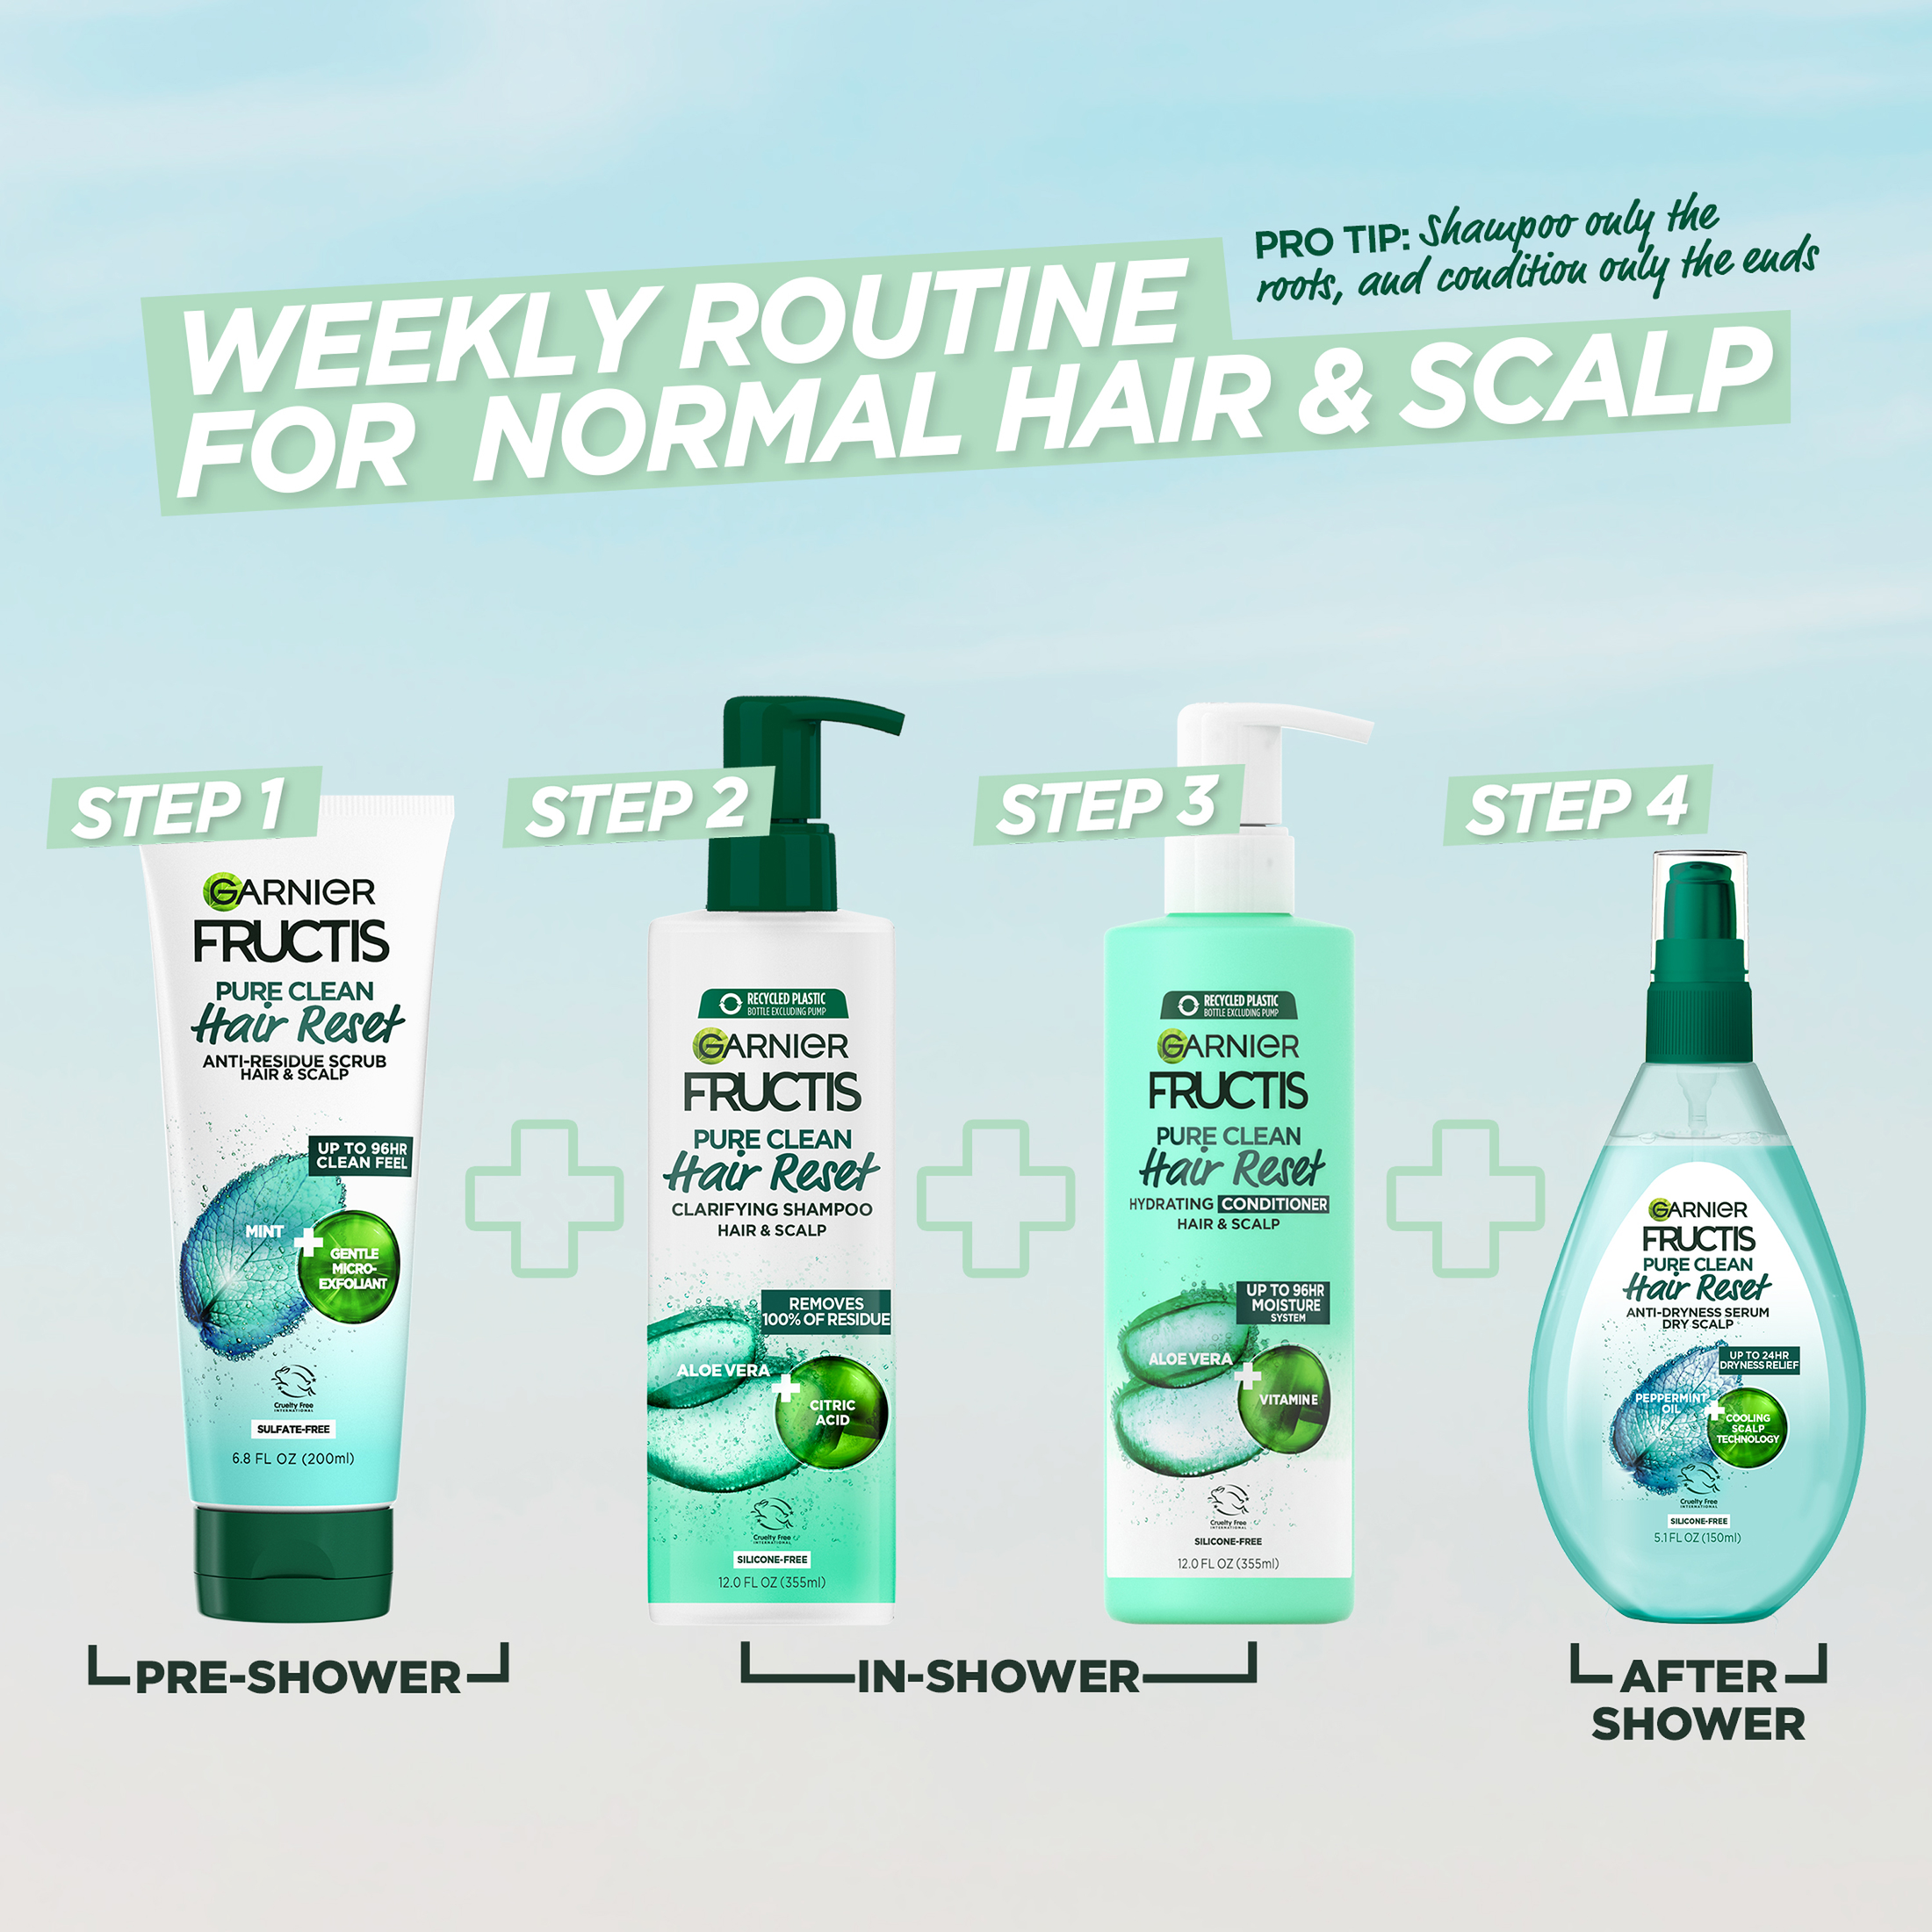 Garnier Fructis Pure Clean Hair Reset Clarifying Shampoo with Aloe Vera, 12 fl oz - image 5 of 7